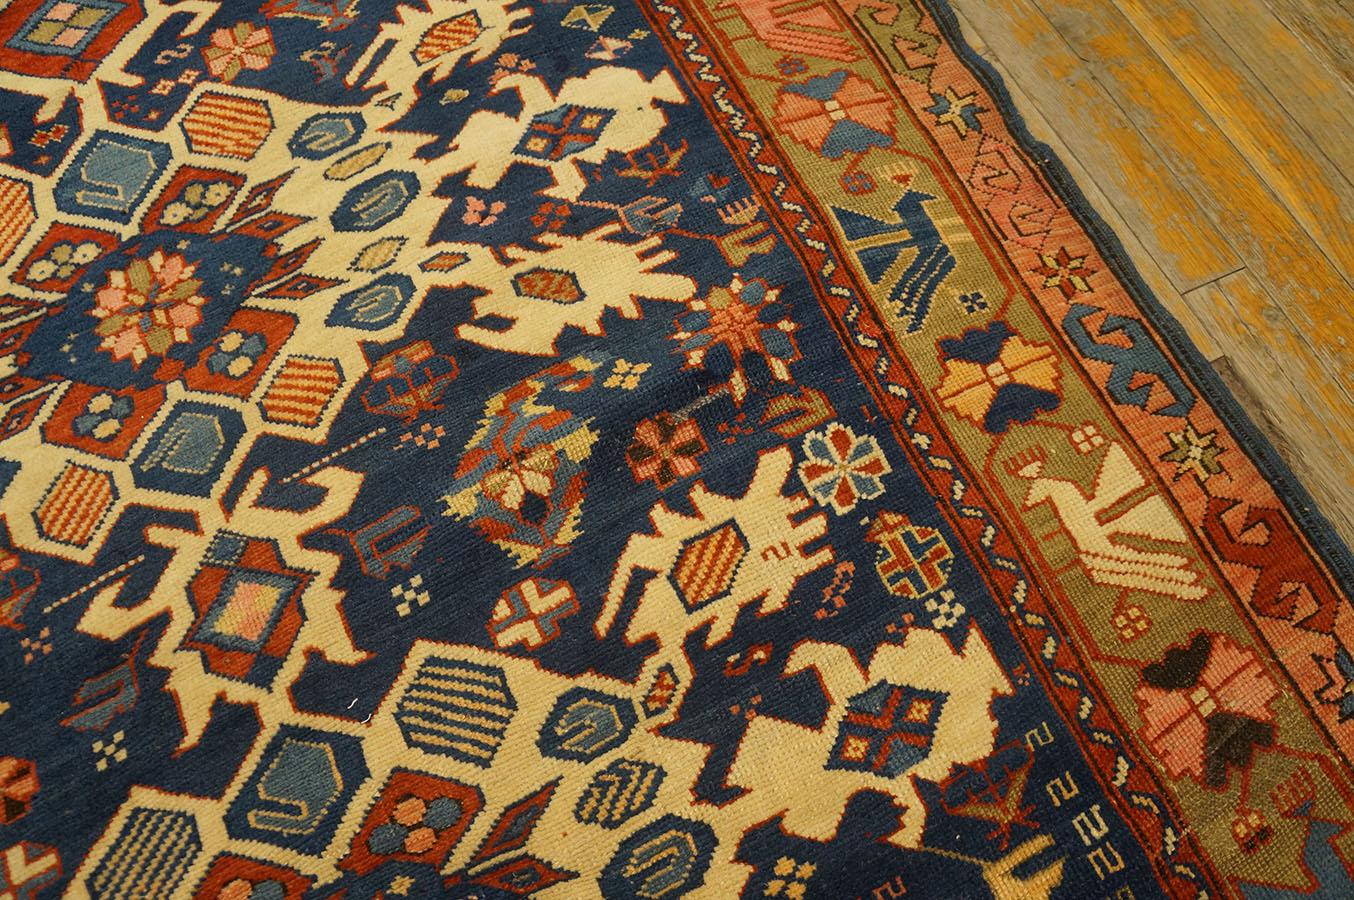 Wool Late 19th Century Caucasian Bidjov Carpet ( 4'6'' x 5'8'' - 122 x 183 cm) For Sale